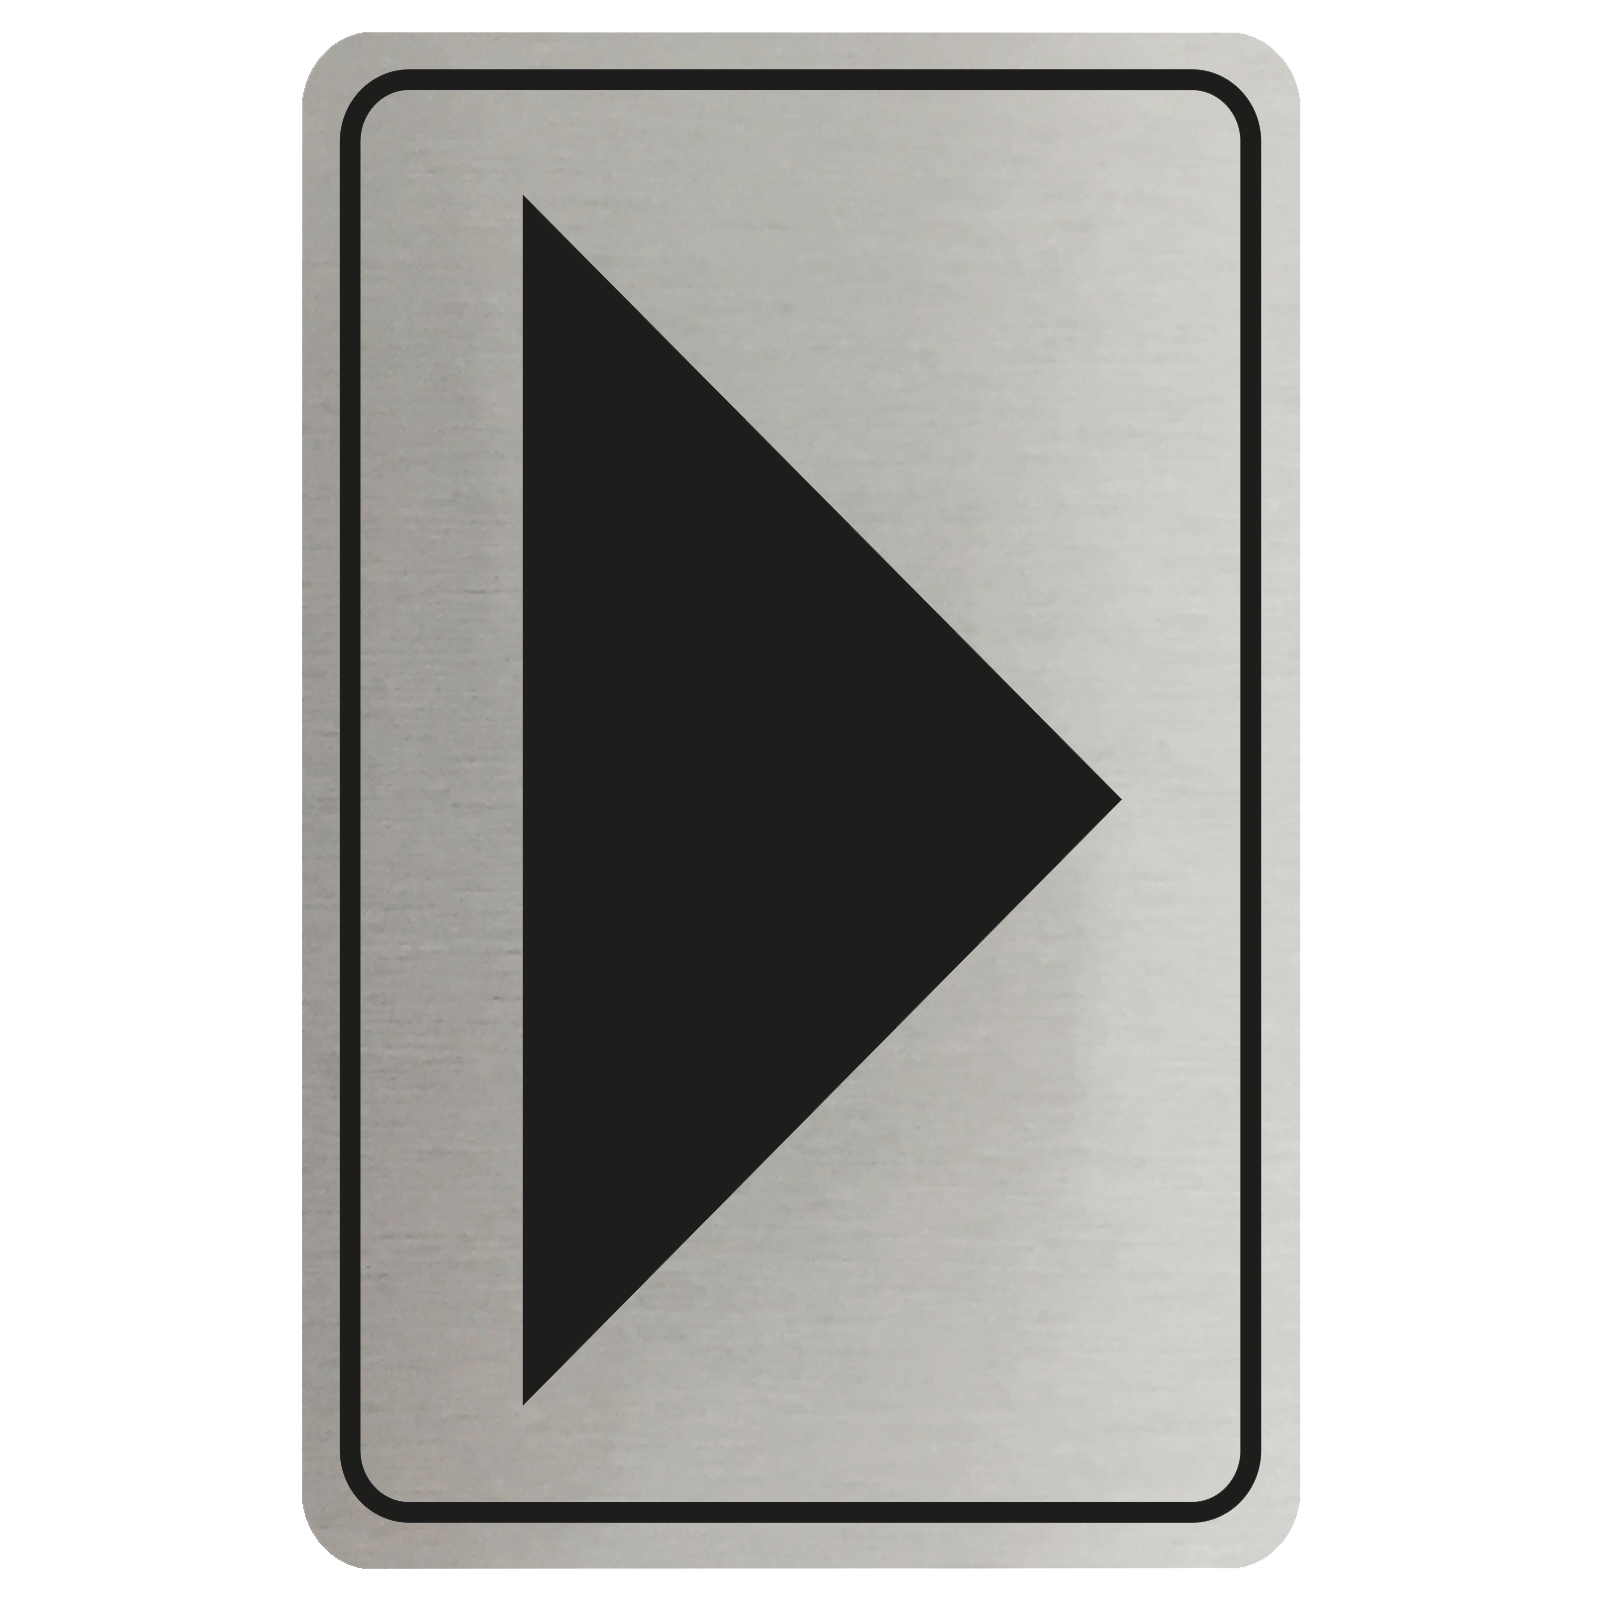 Large Arrow Door Sign - Black on Silver